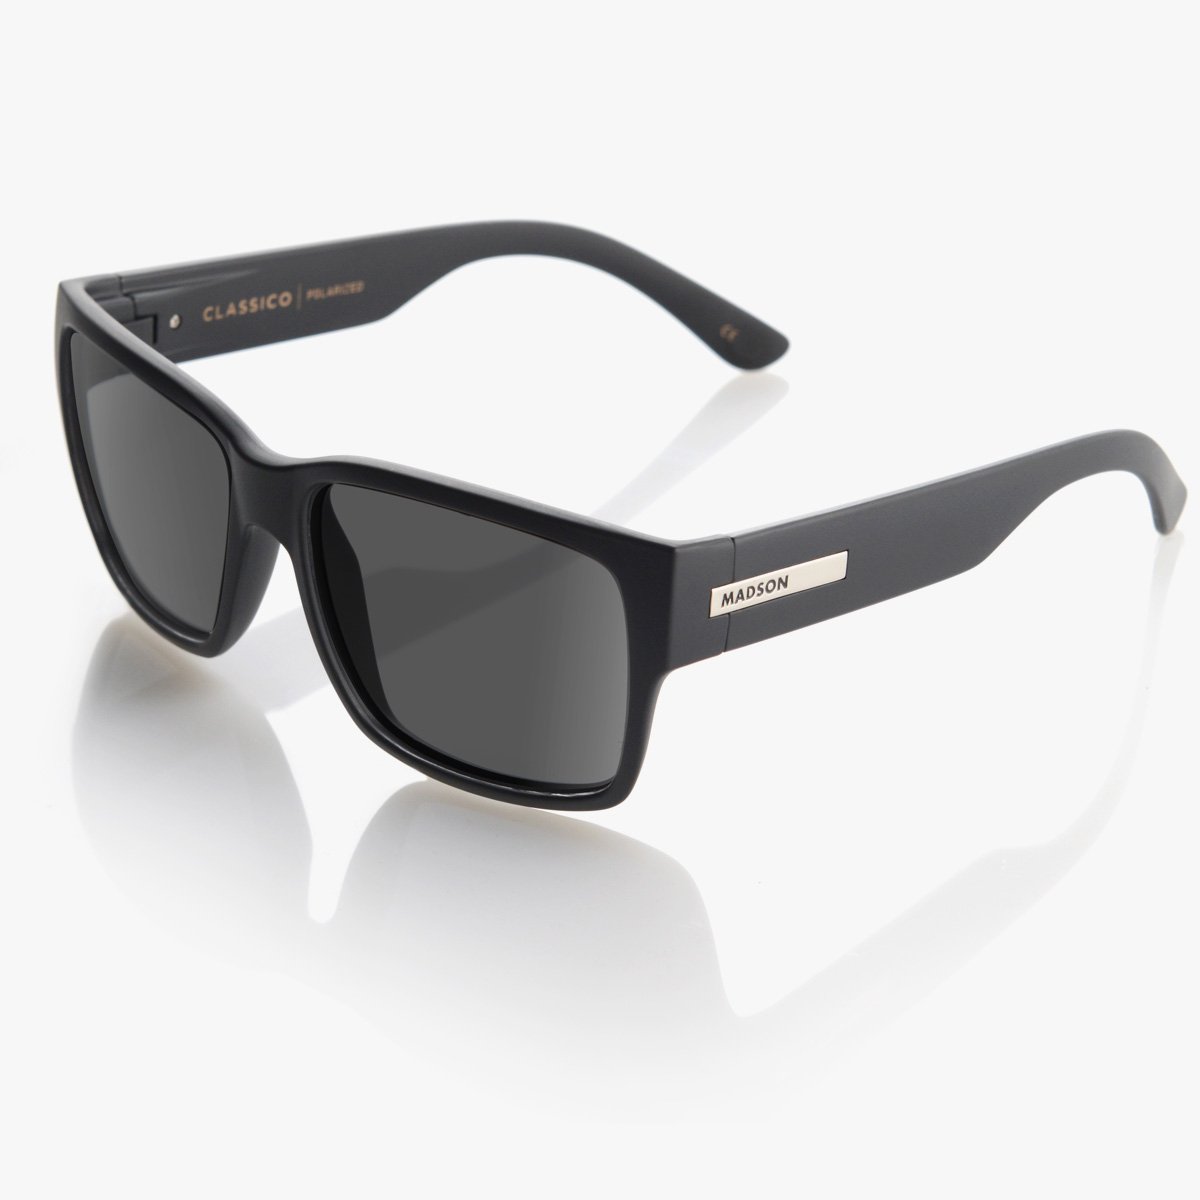 MADSON Classico mens oversized sunglasses